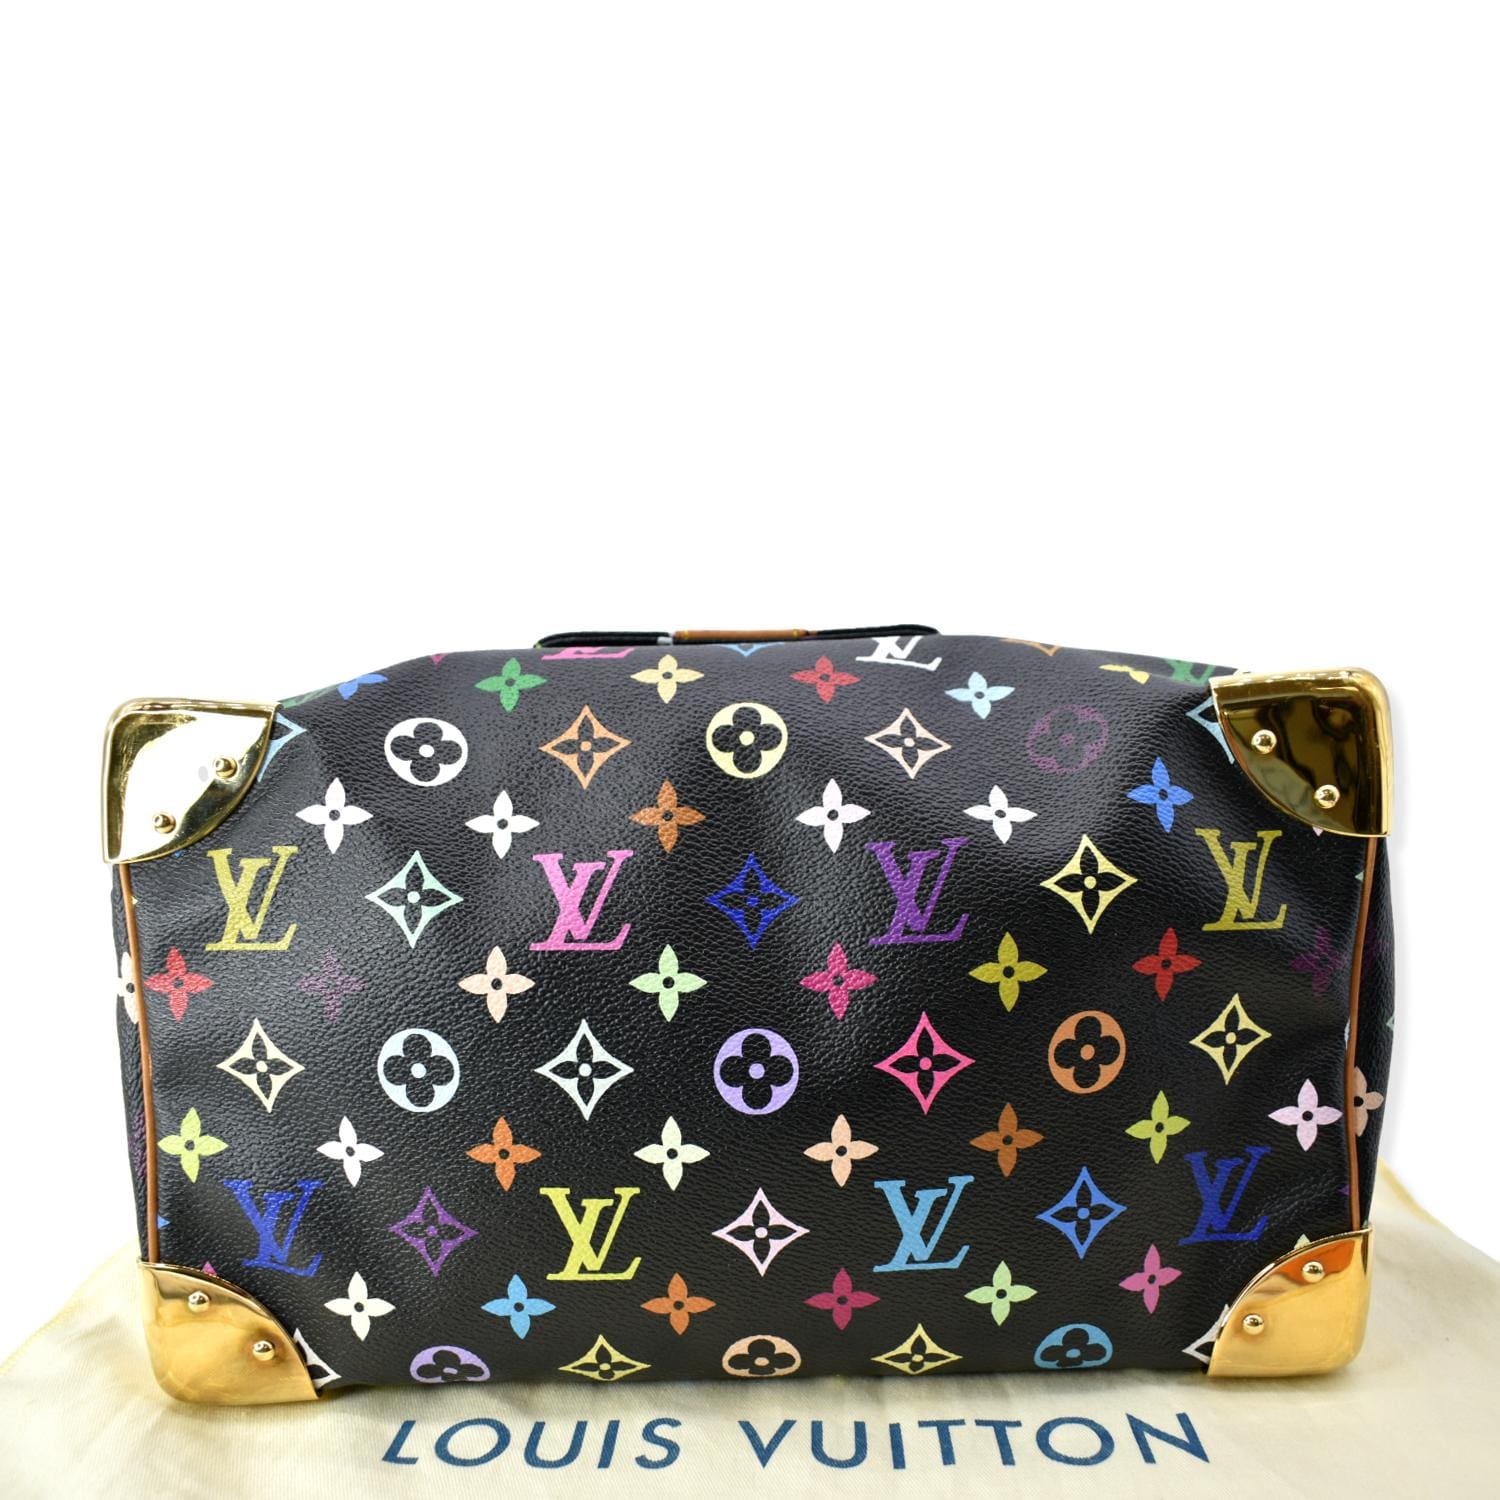 Decades Inc. - Just in! 󾬶󾓰󾭩 Louis Vuitton Glitter Speedy from